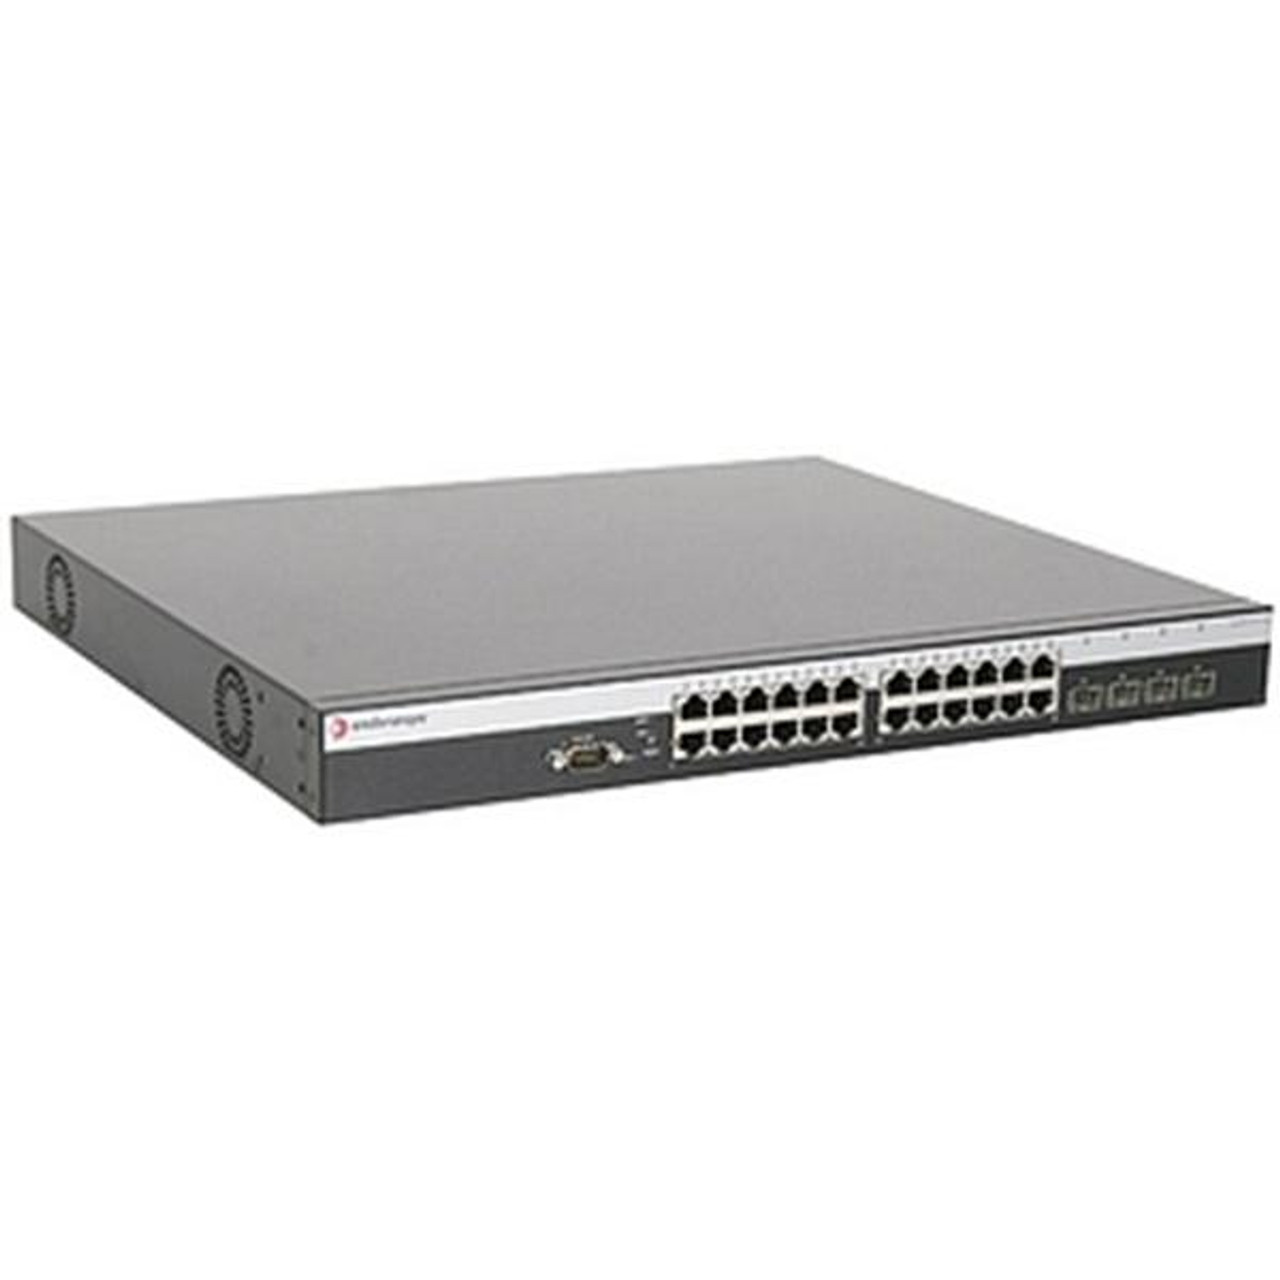 B3G124-24P-G Enterasys SecureStack B3 B3G12424P Switch 24-Ports EN Fast EN Gigabit EN 10Base-T 100Base-TX 1000Base-T + 4 x shared SFP (empty) 1U stackable